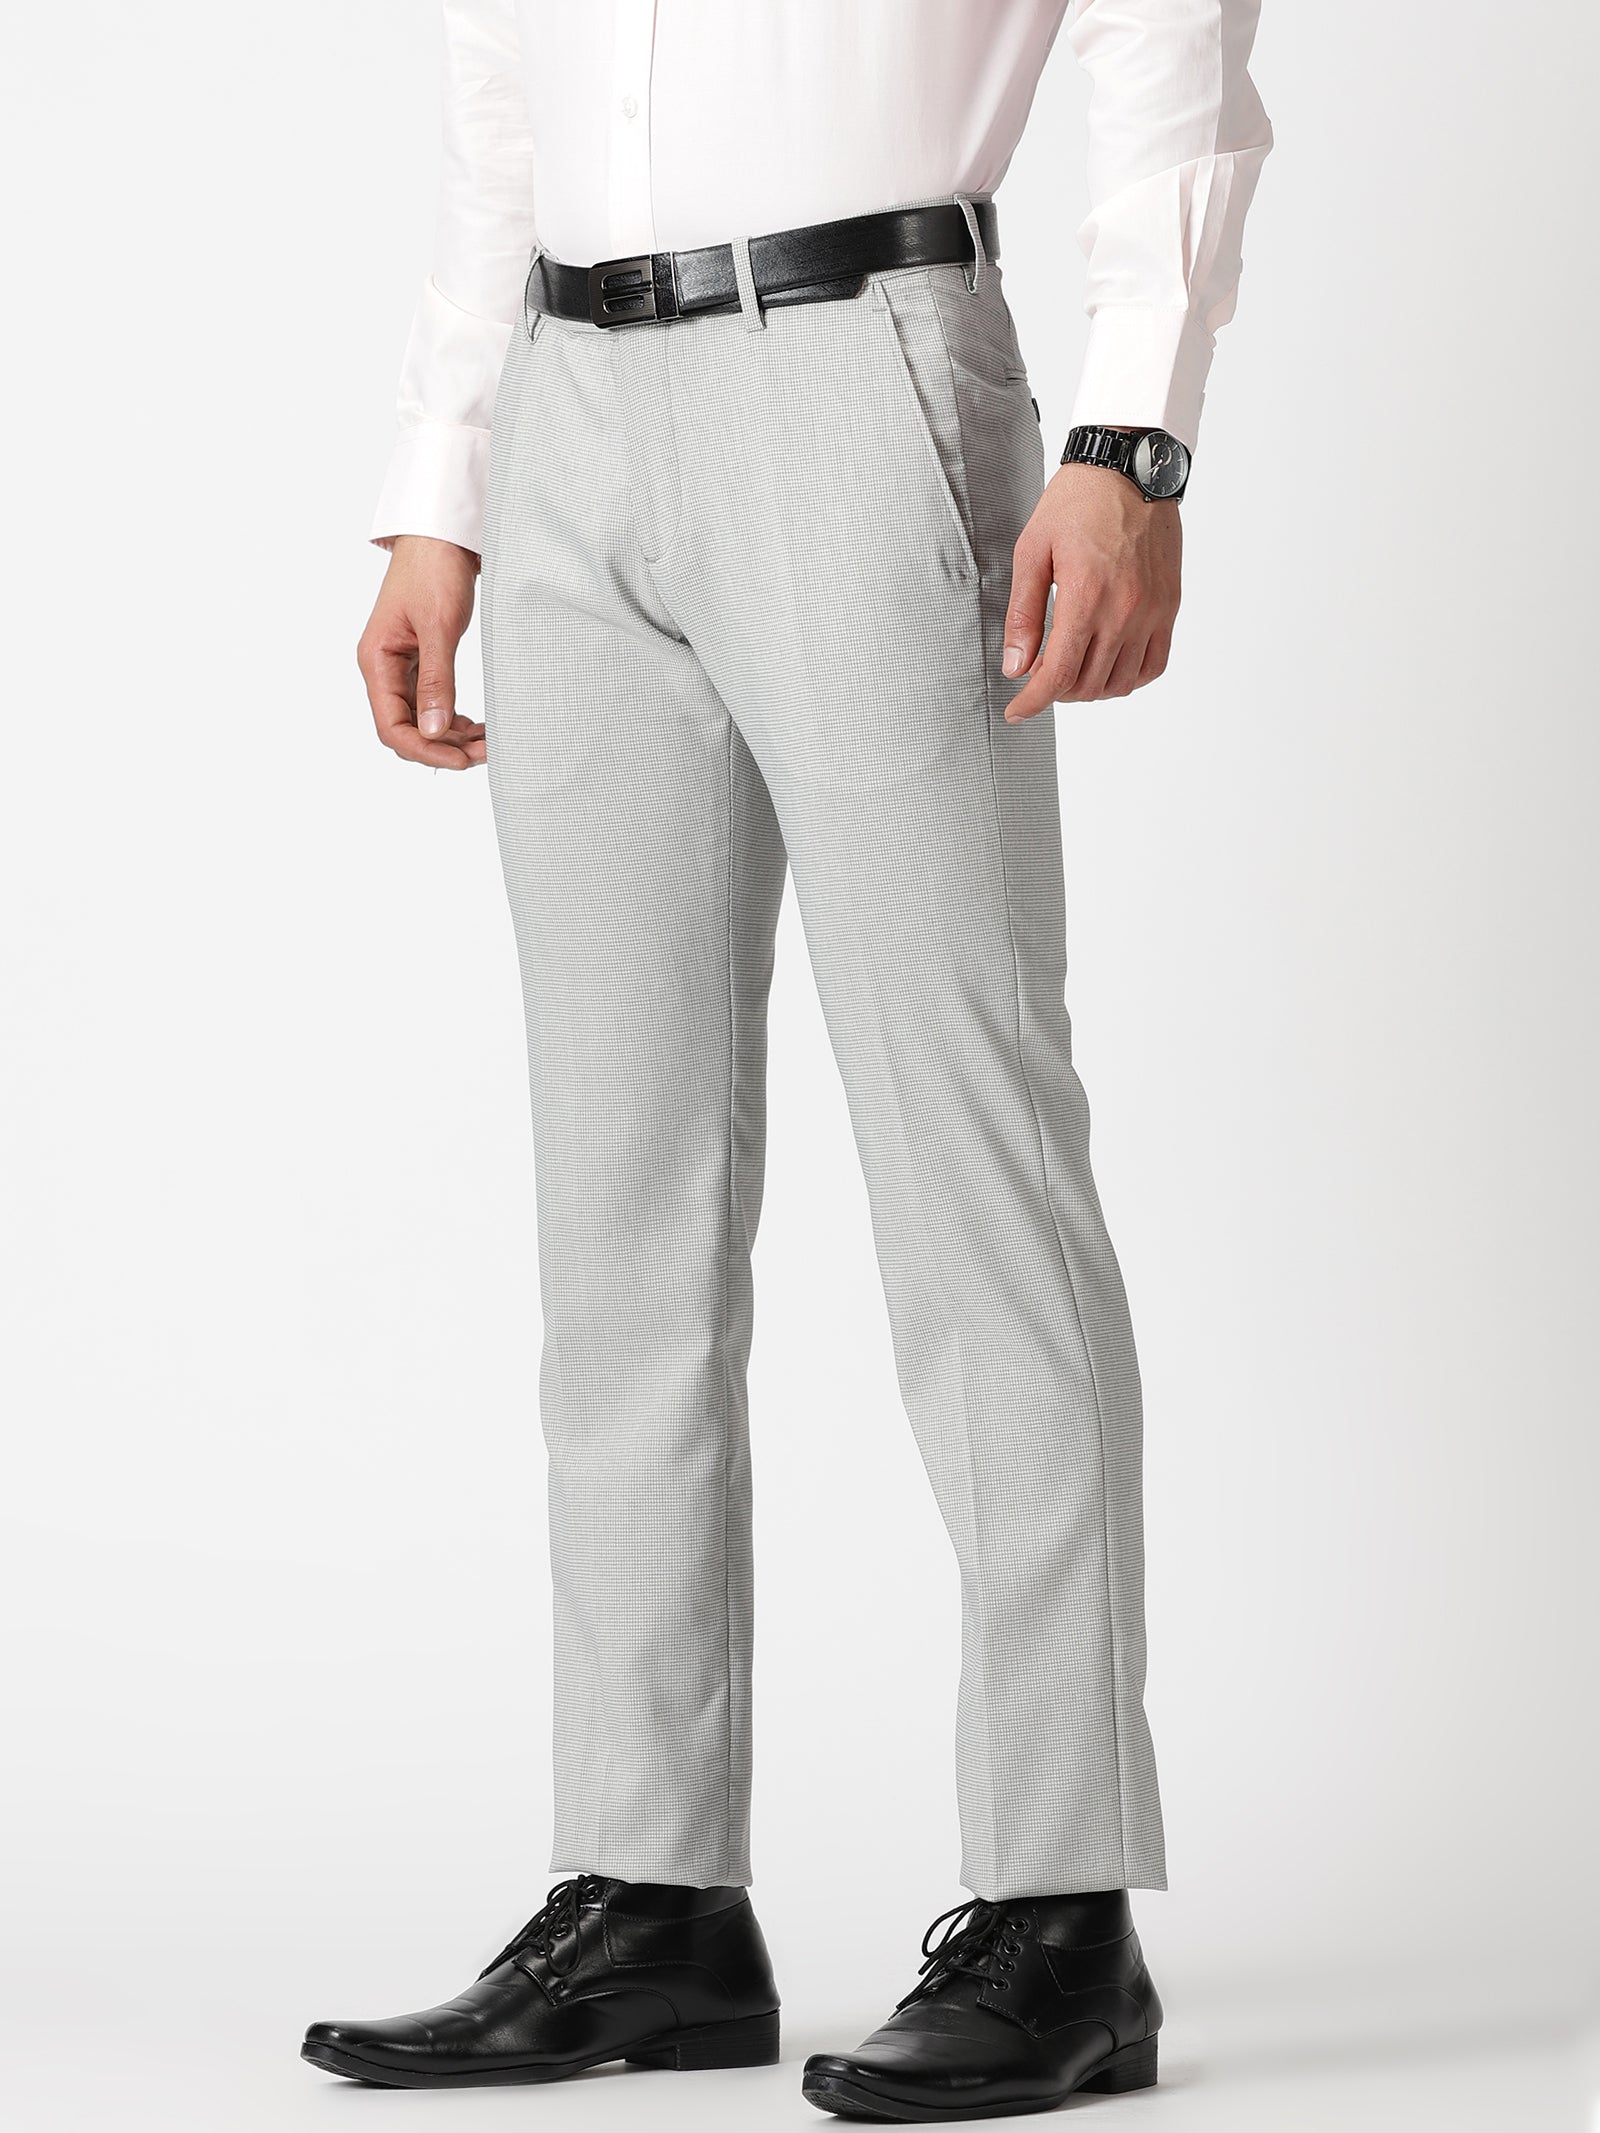 Buy Blue Trousers  Pants for Men by NETPLAY Online  Ajiocom